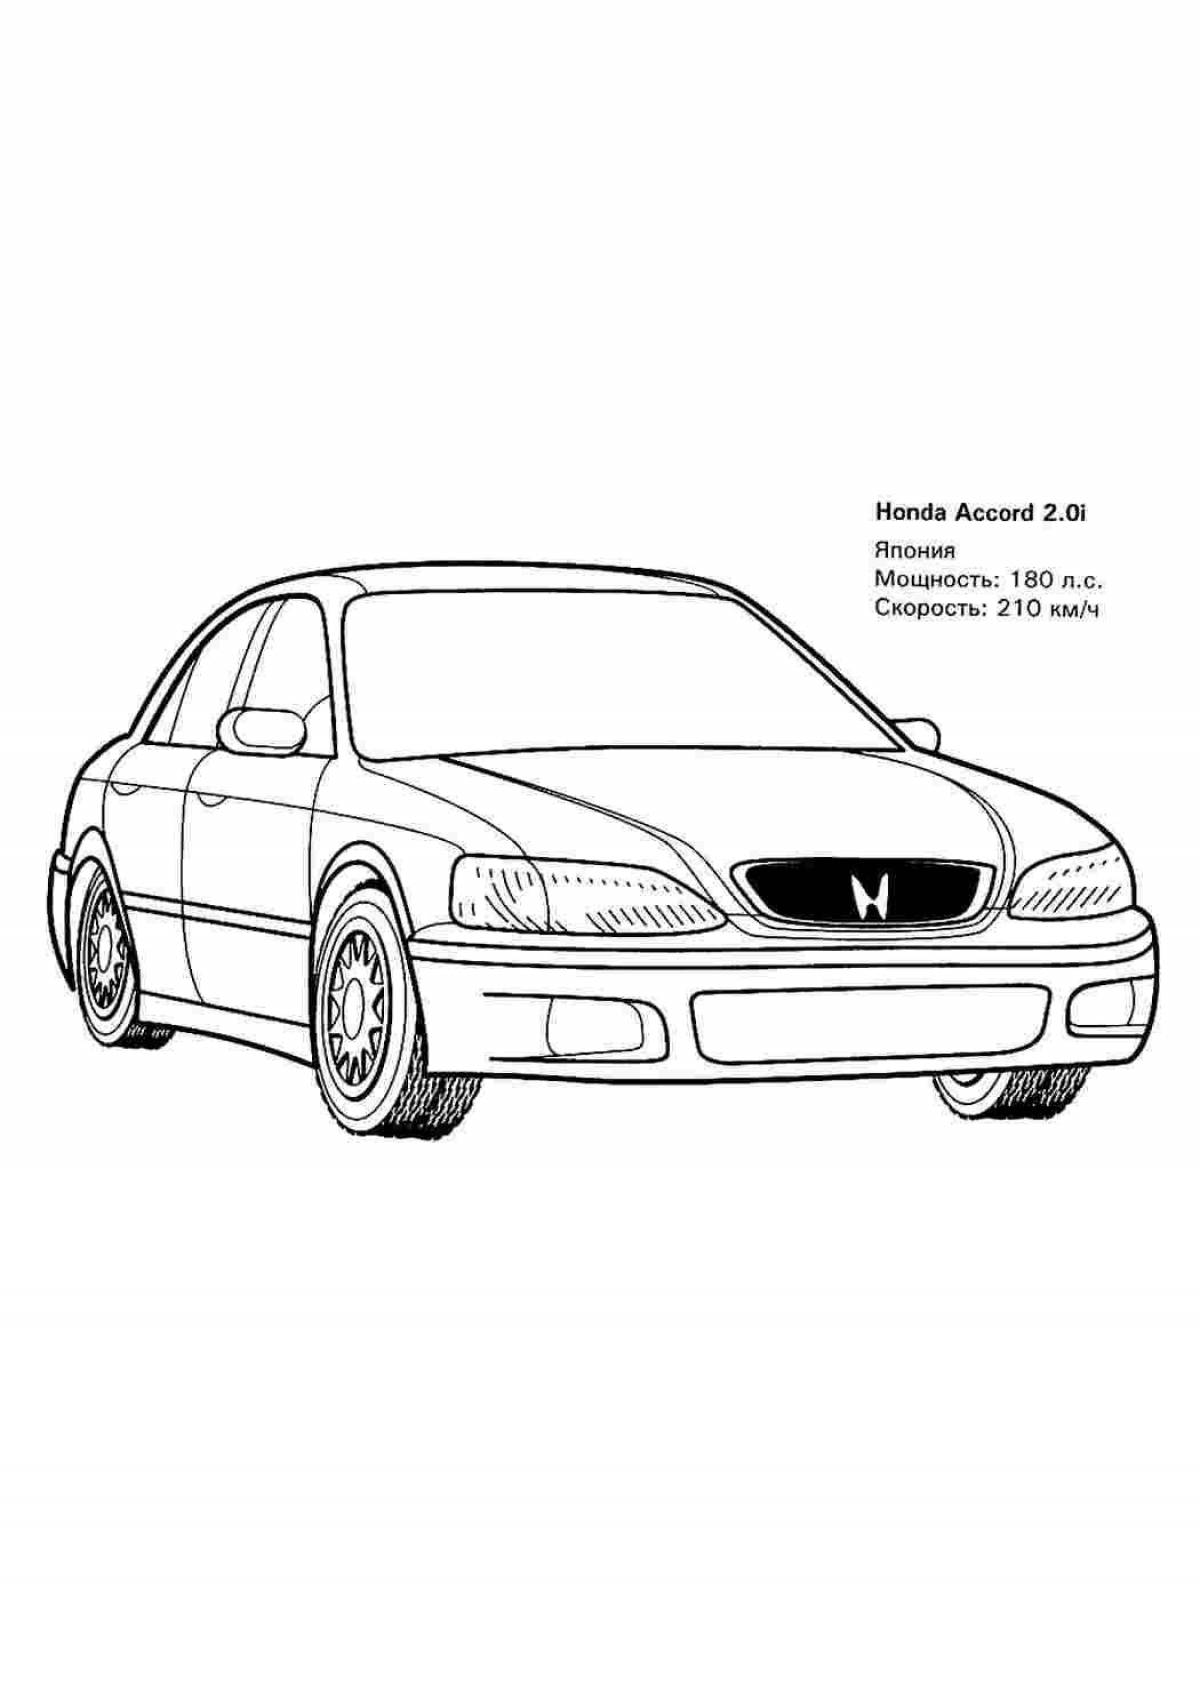 Honda accord animated coloring page